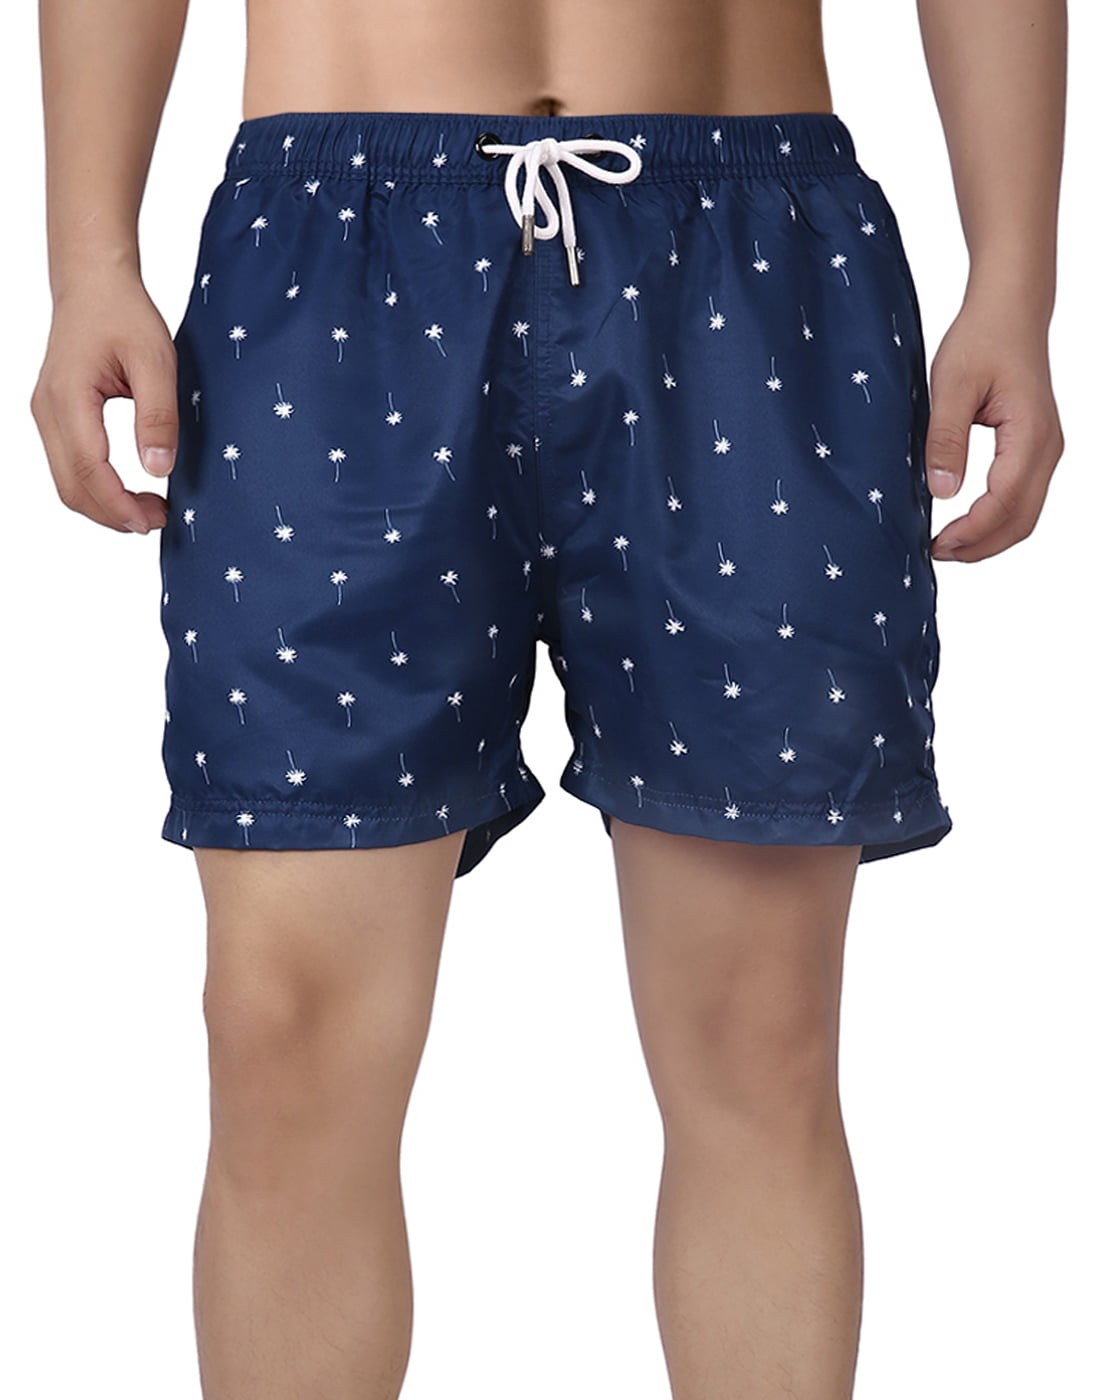 HDE - HDE Mens Swim Trunk Shorts - Slim Fit Mesh Lining Pockets Quick Dry  Board Short (Navy Palm Trees, L 33-35) - Walmart.com - Walmart.com